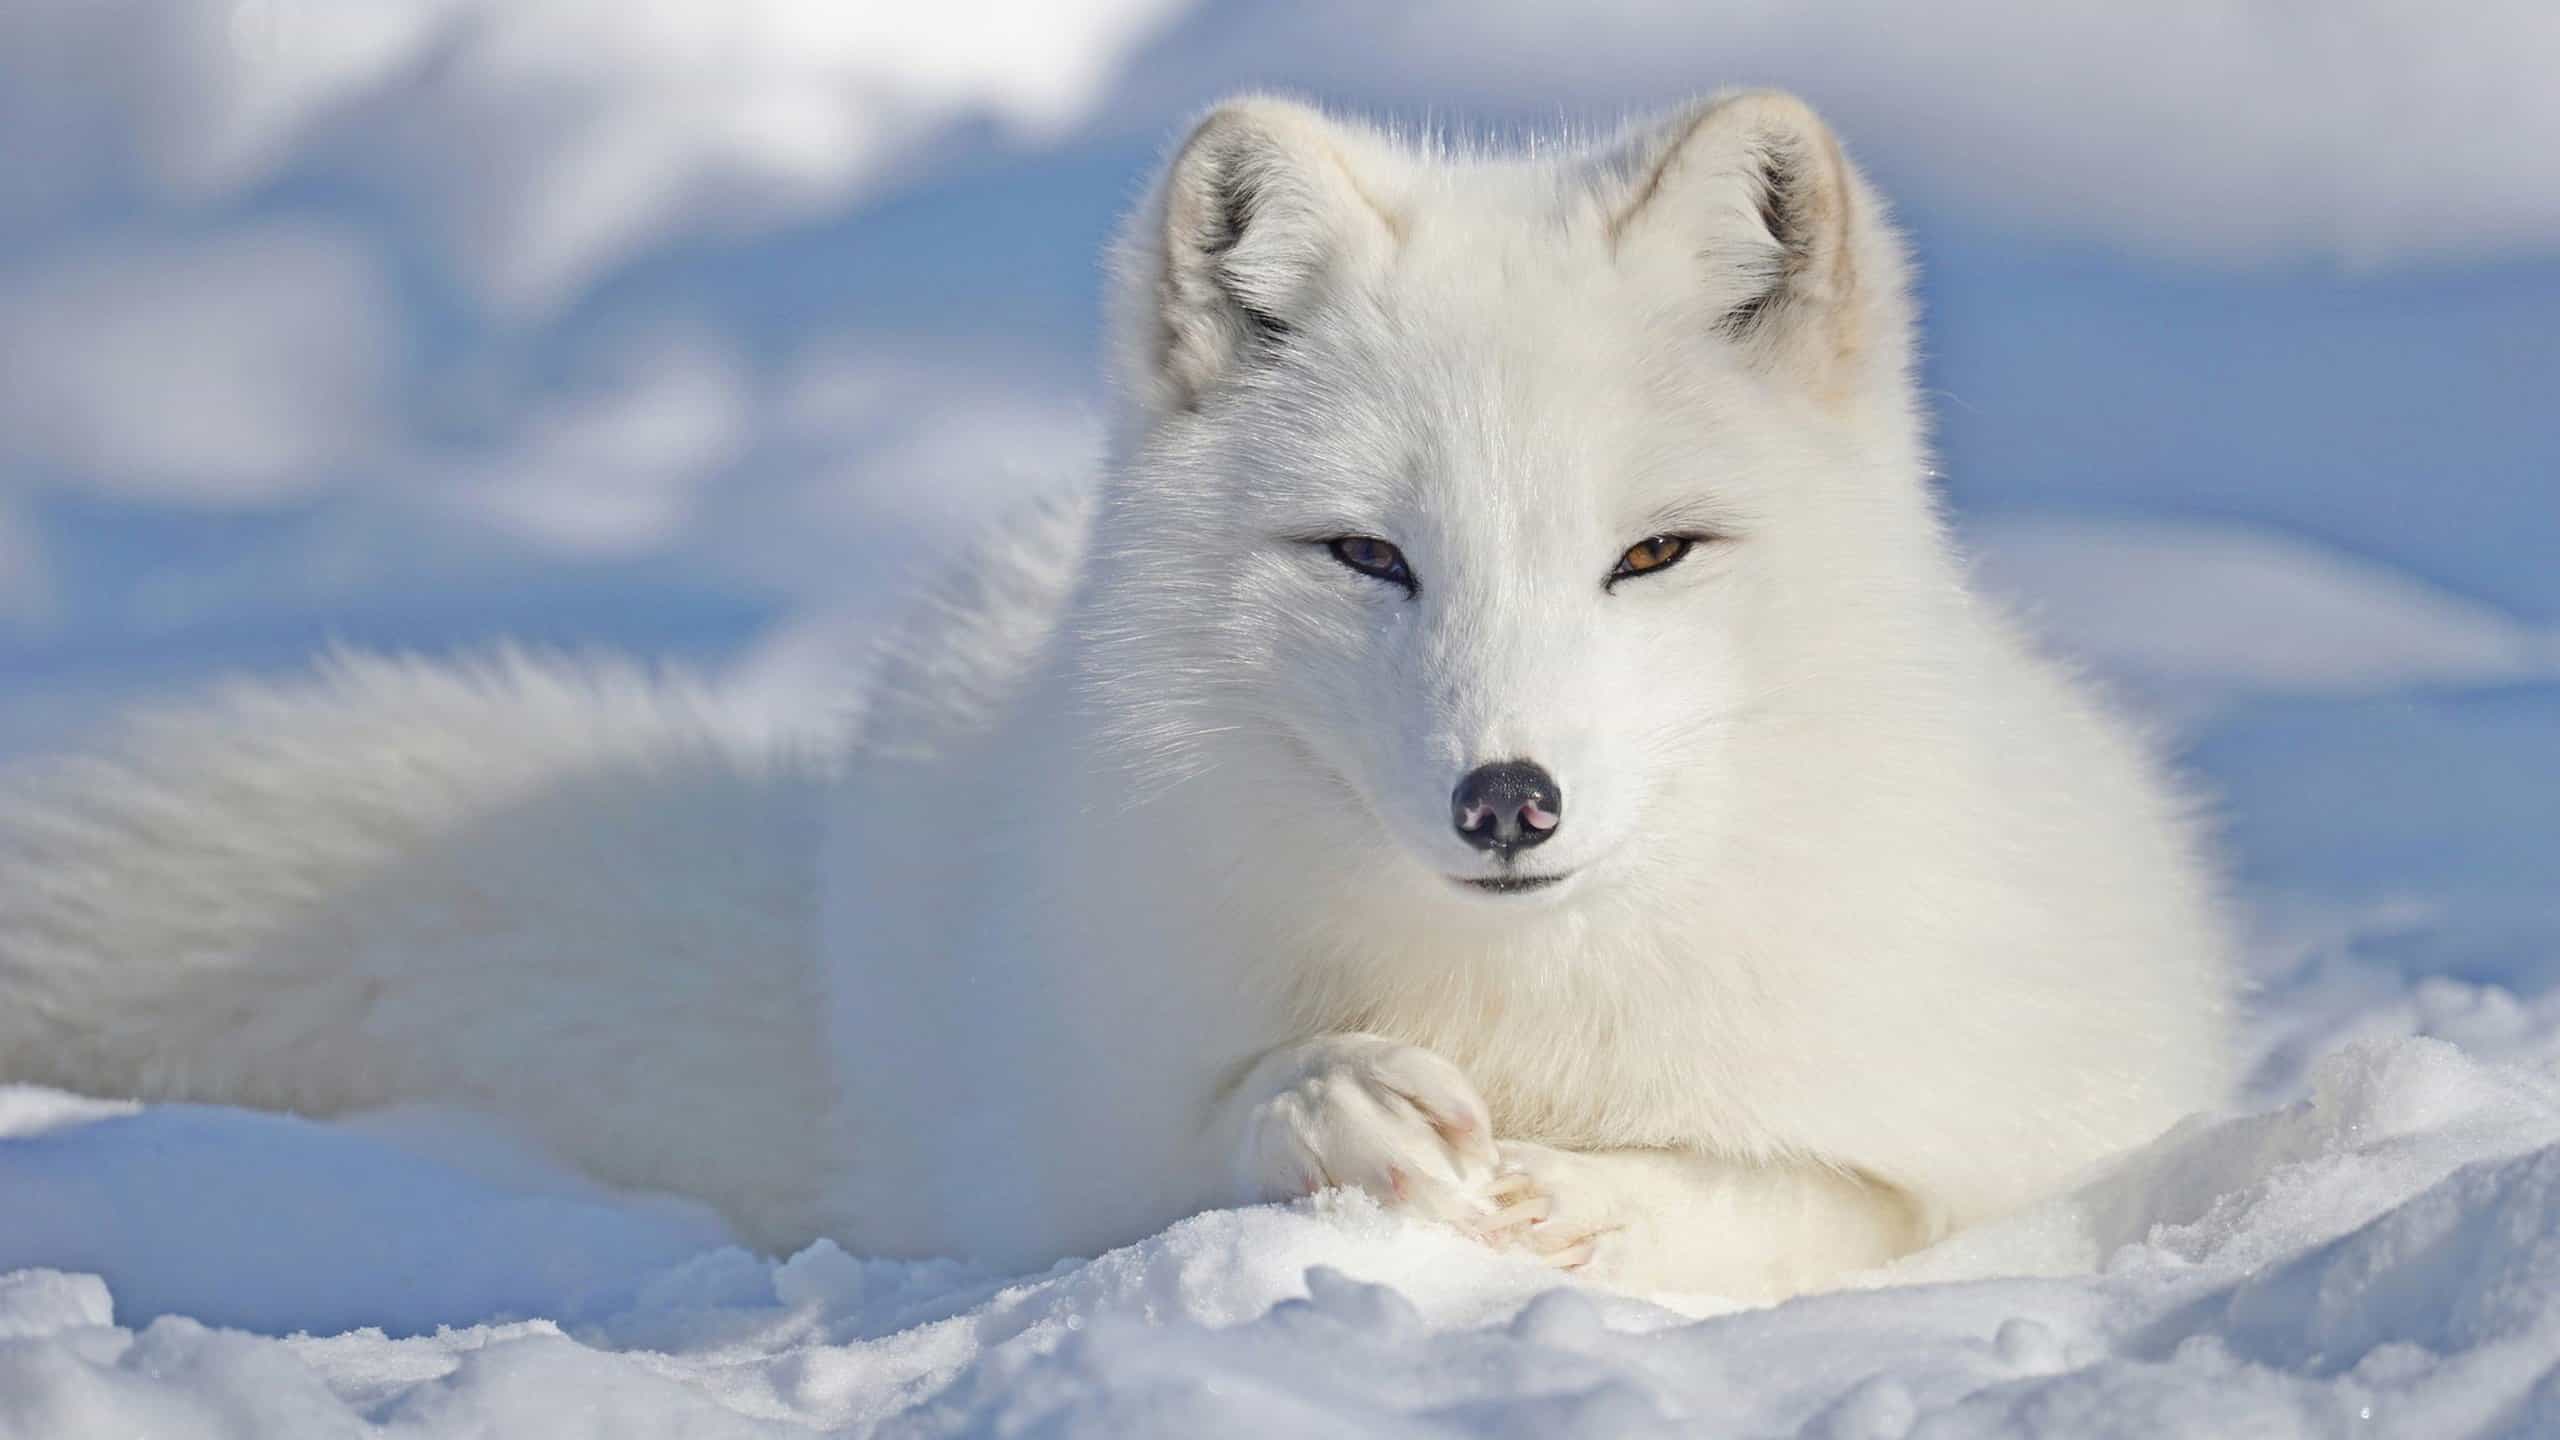 Arctic Fox Animal Facts | Vulpes lagopus - AZ Animals